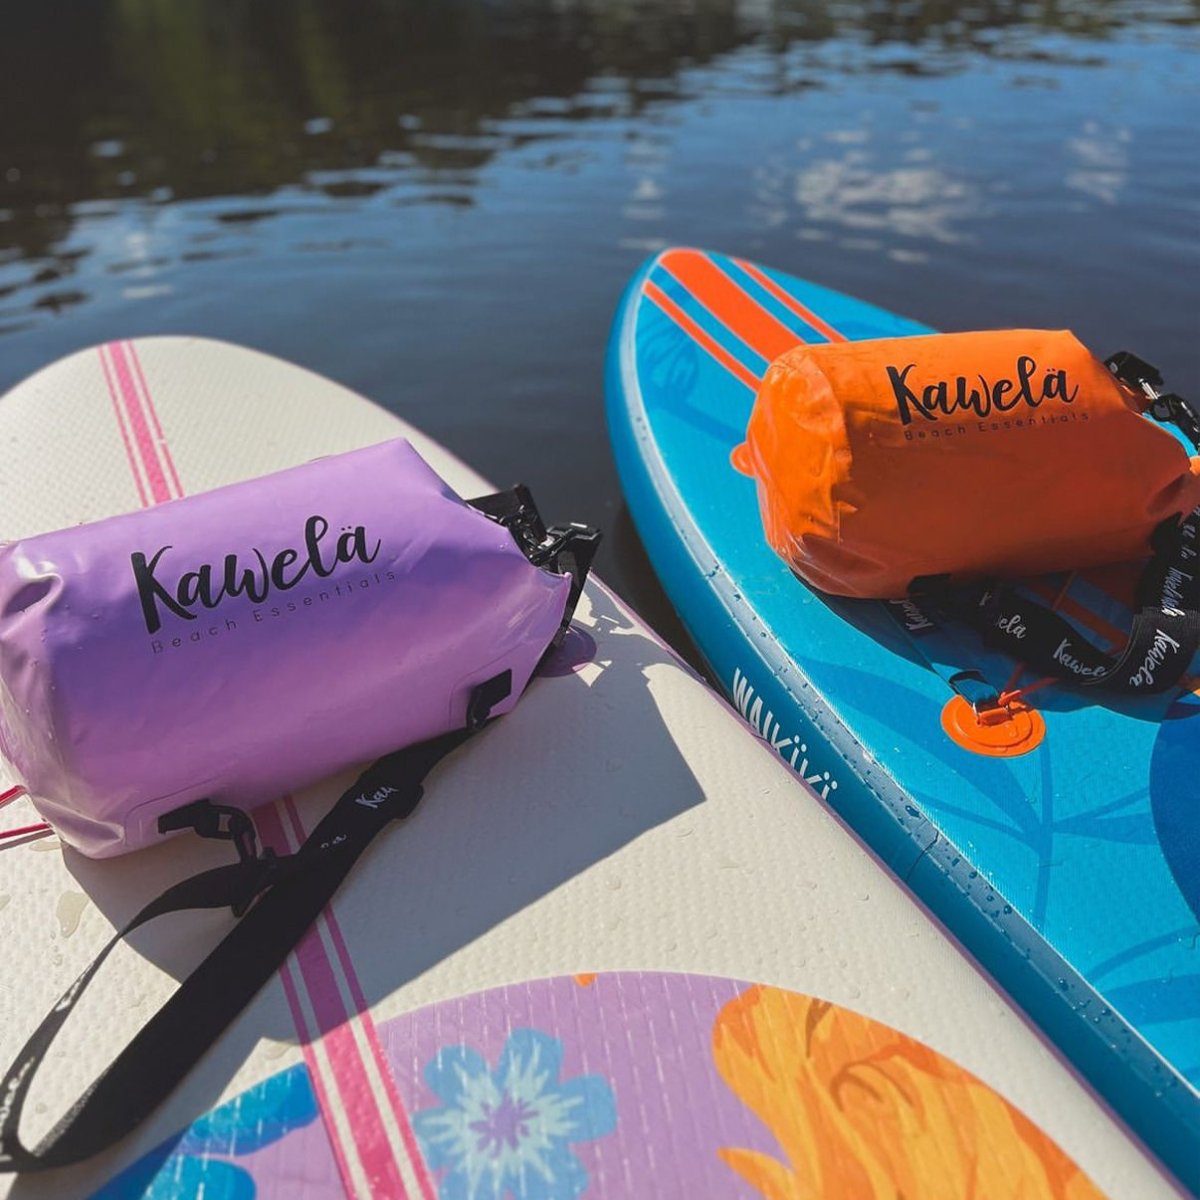 Waikiki Blue (2024) - 10'6" Premium Inflatable Paddle Board - The Wild Tribe